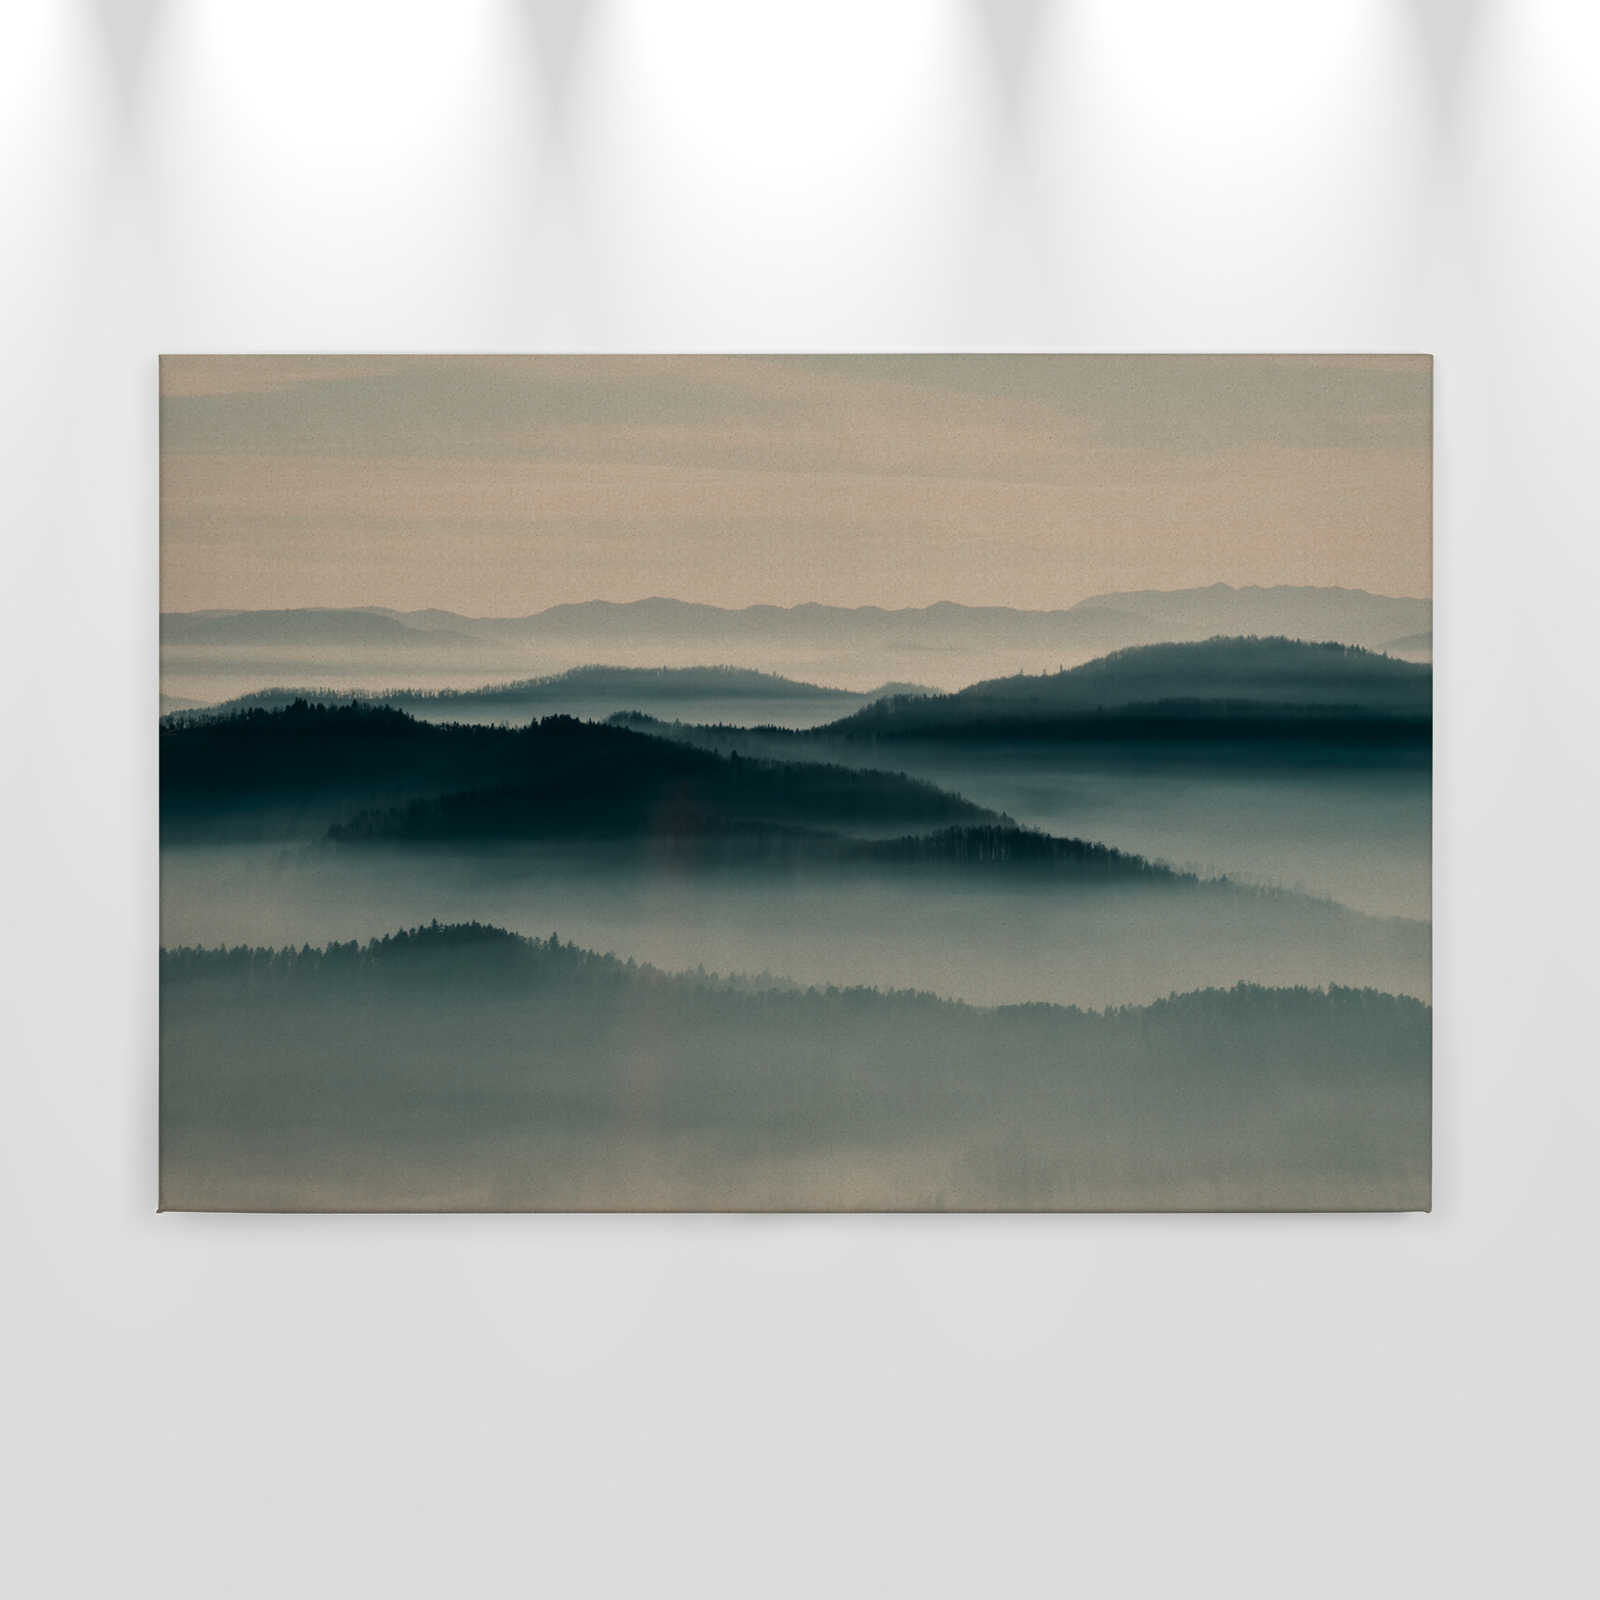             Horizon 1 - Leinwandbild mit Nebel-Landschaft, Natur Sky Line in Pappe Struktur – 0,90 m x 0,60 m
        